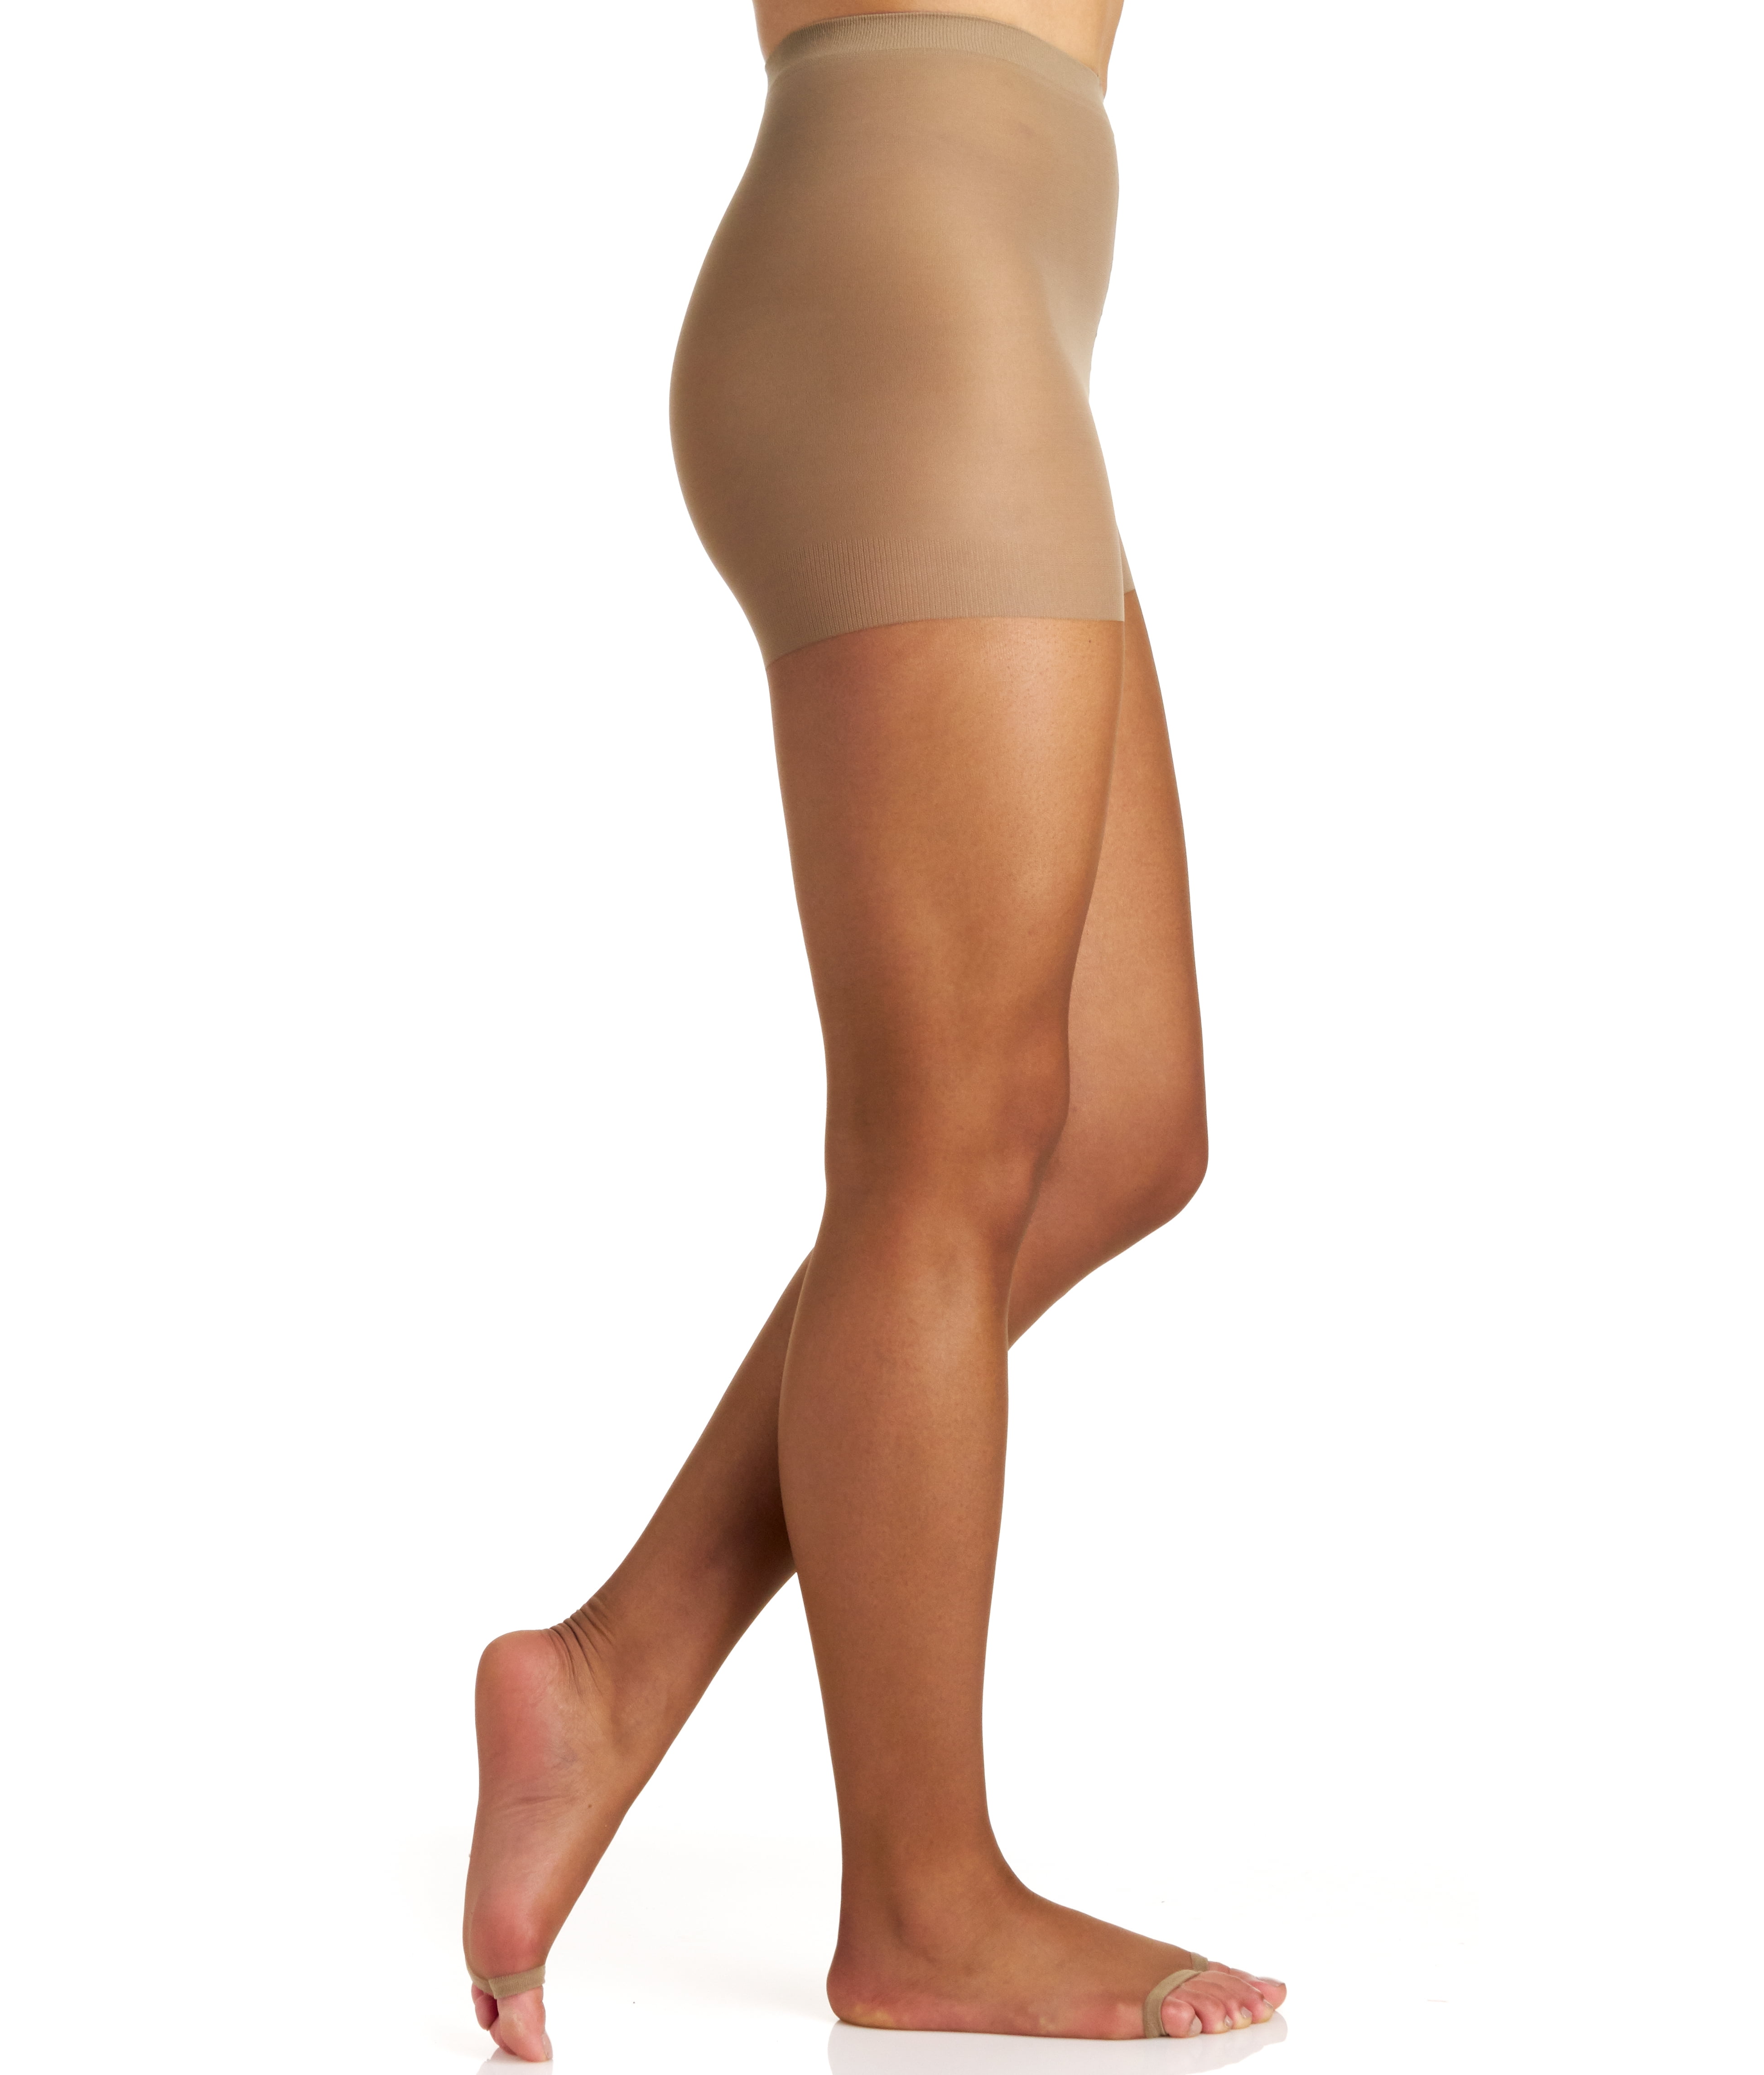 Resistant Nylon Ultra Sheer Control Top Pantyhose Women Summer